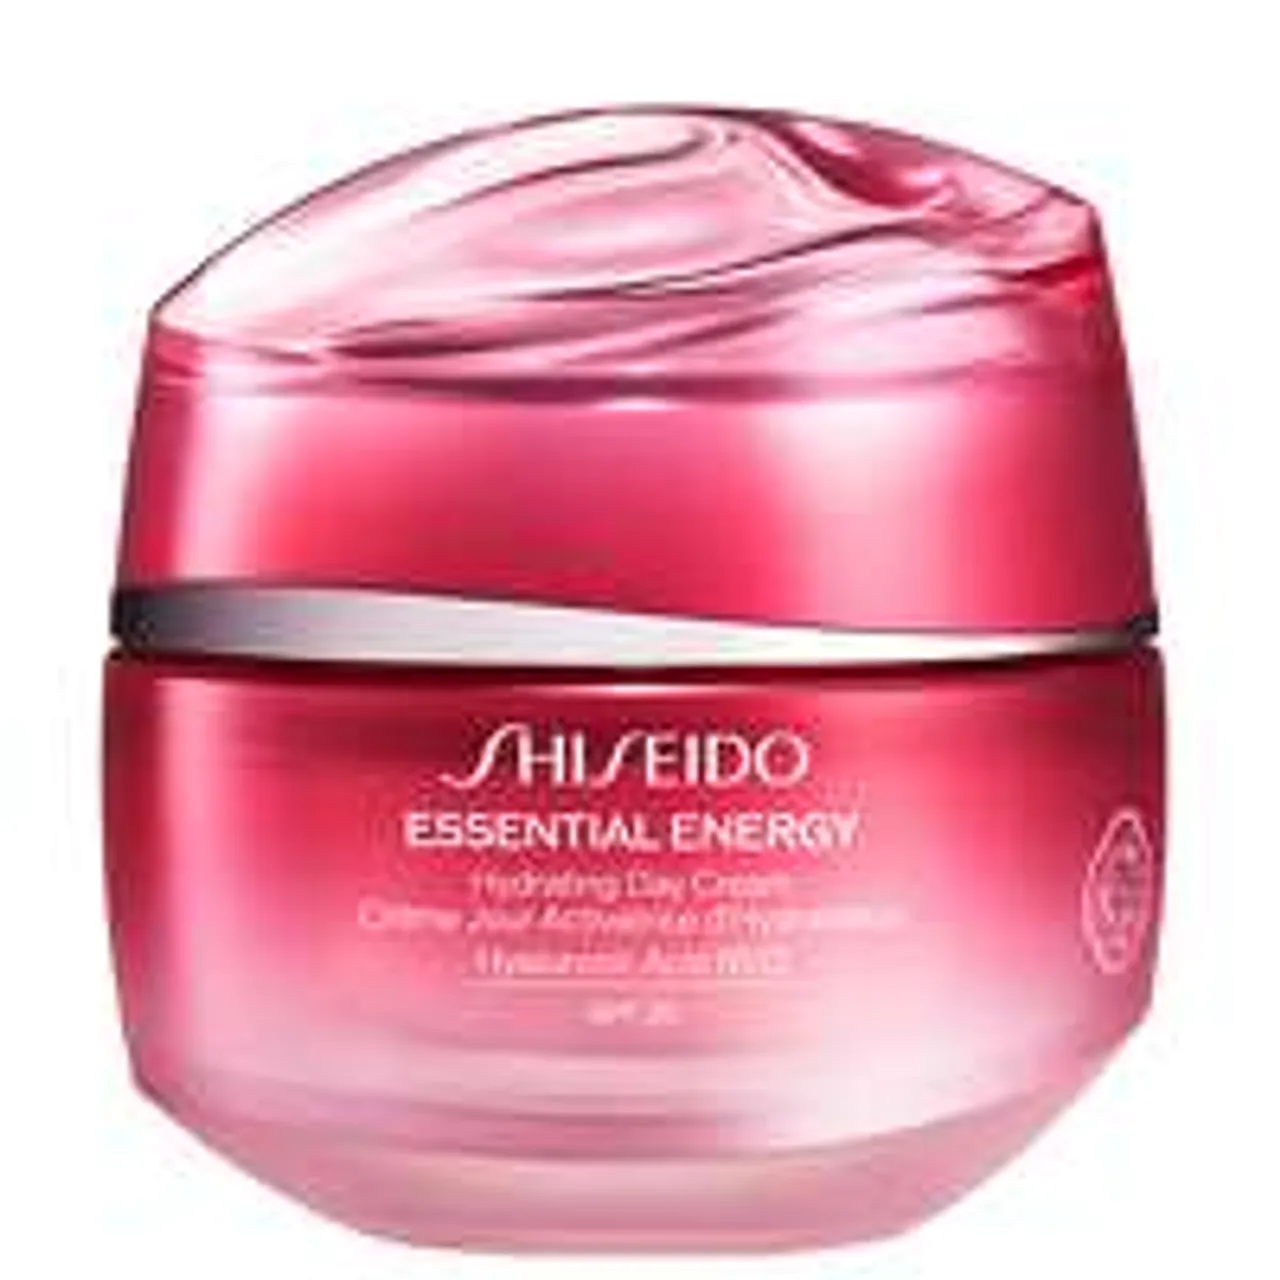 Shiseido Day And Night Creams Essential Energy: Hydrating Day Cream SPF20 50ml / 1.7 oz.